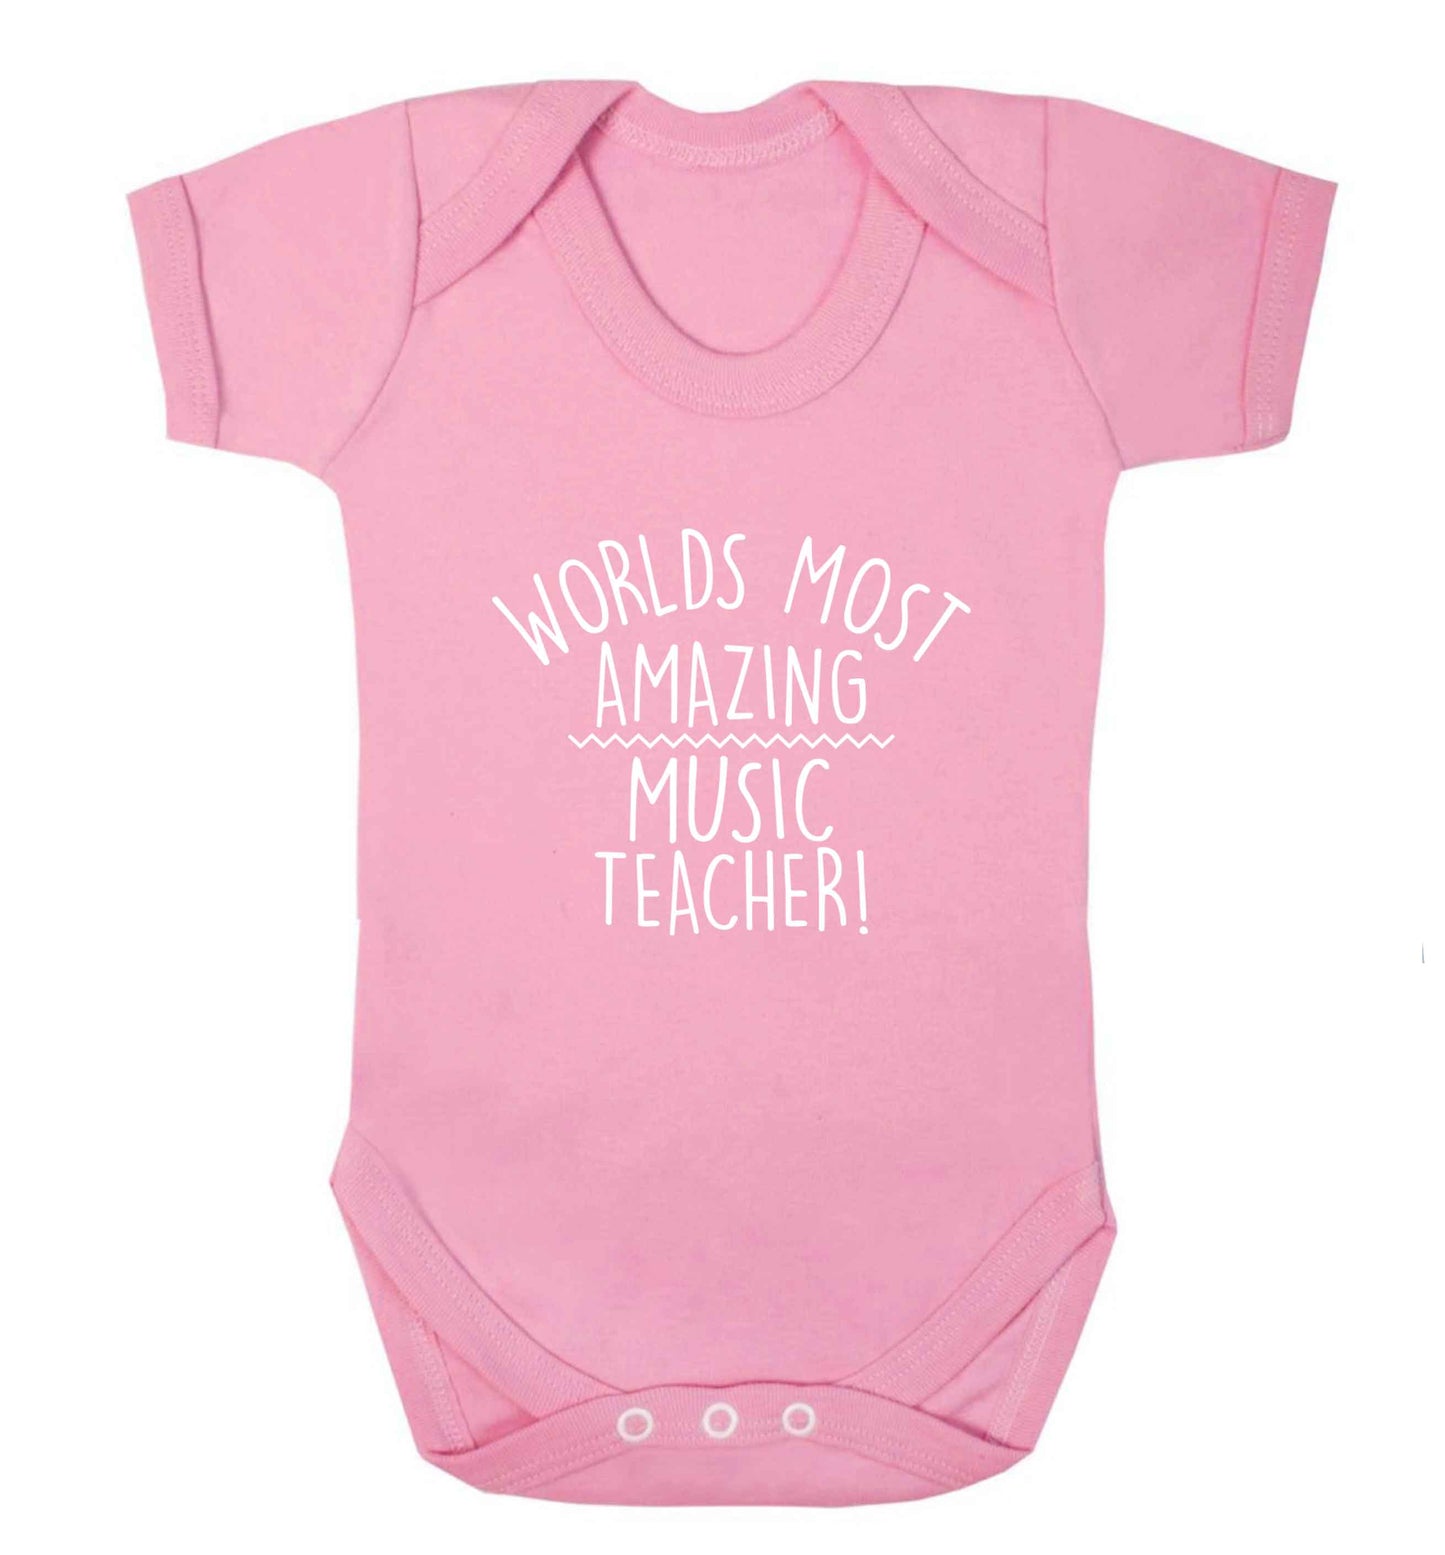 Worlds most amazing music teacher baby vest pale pink 18-24 months